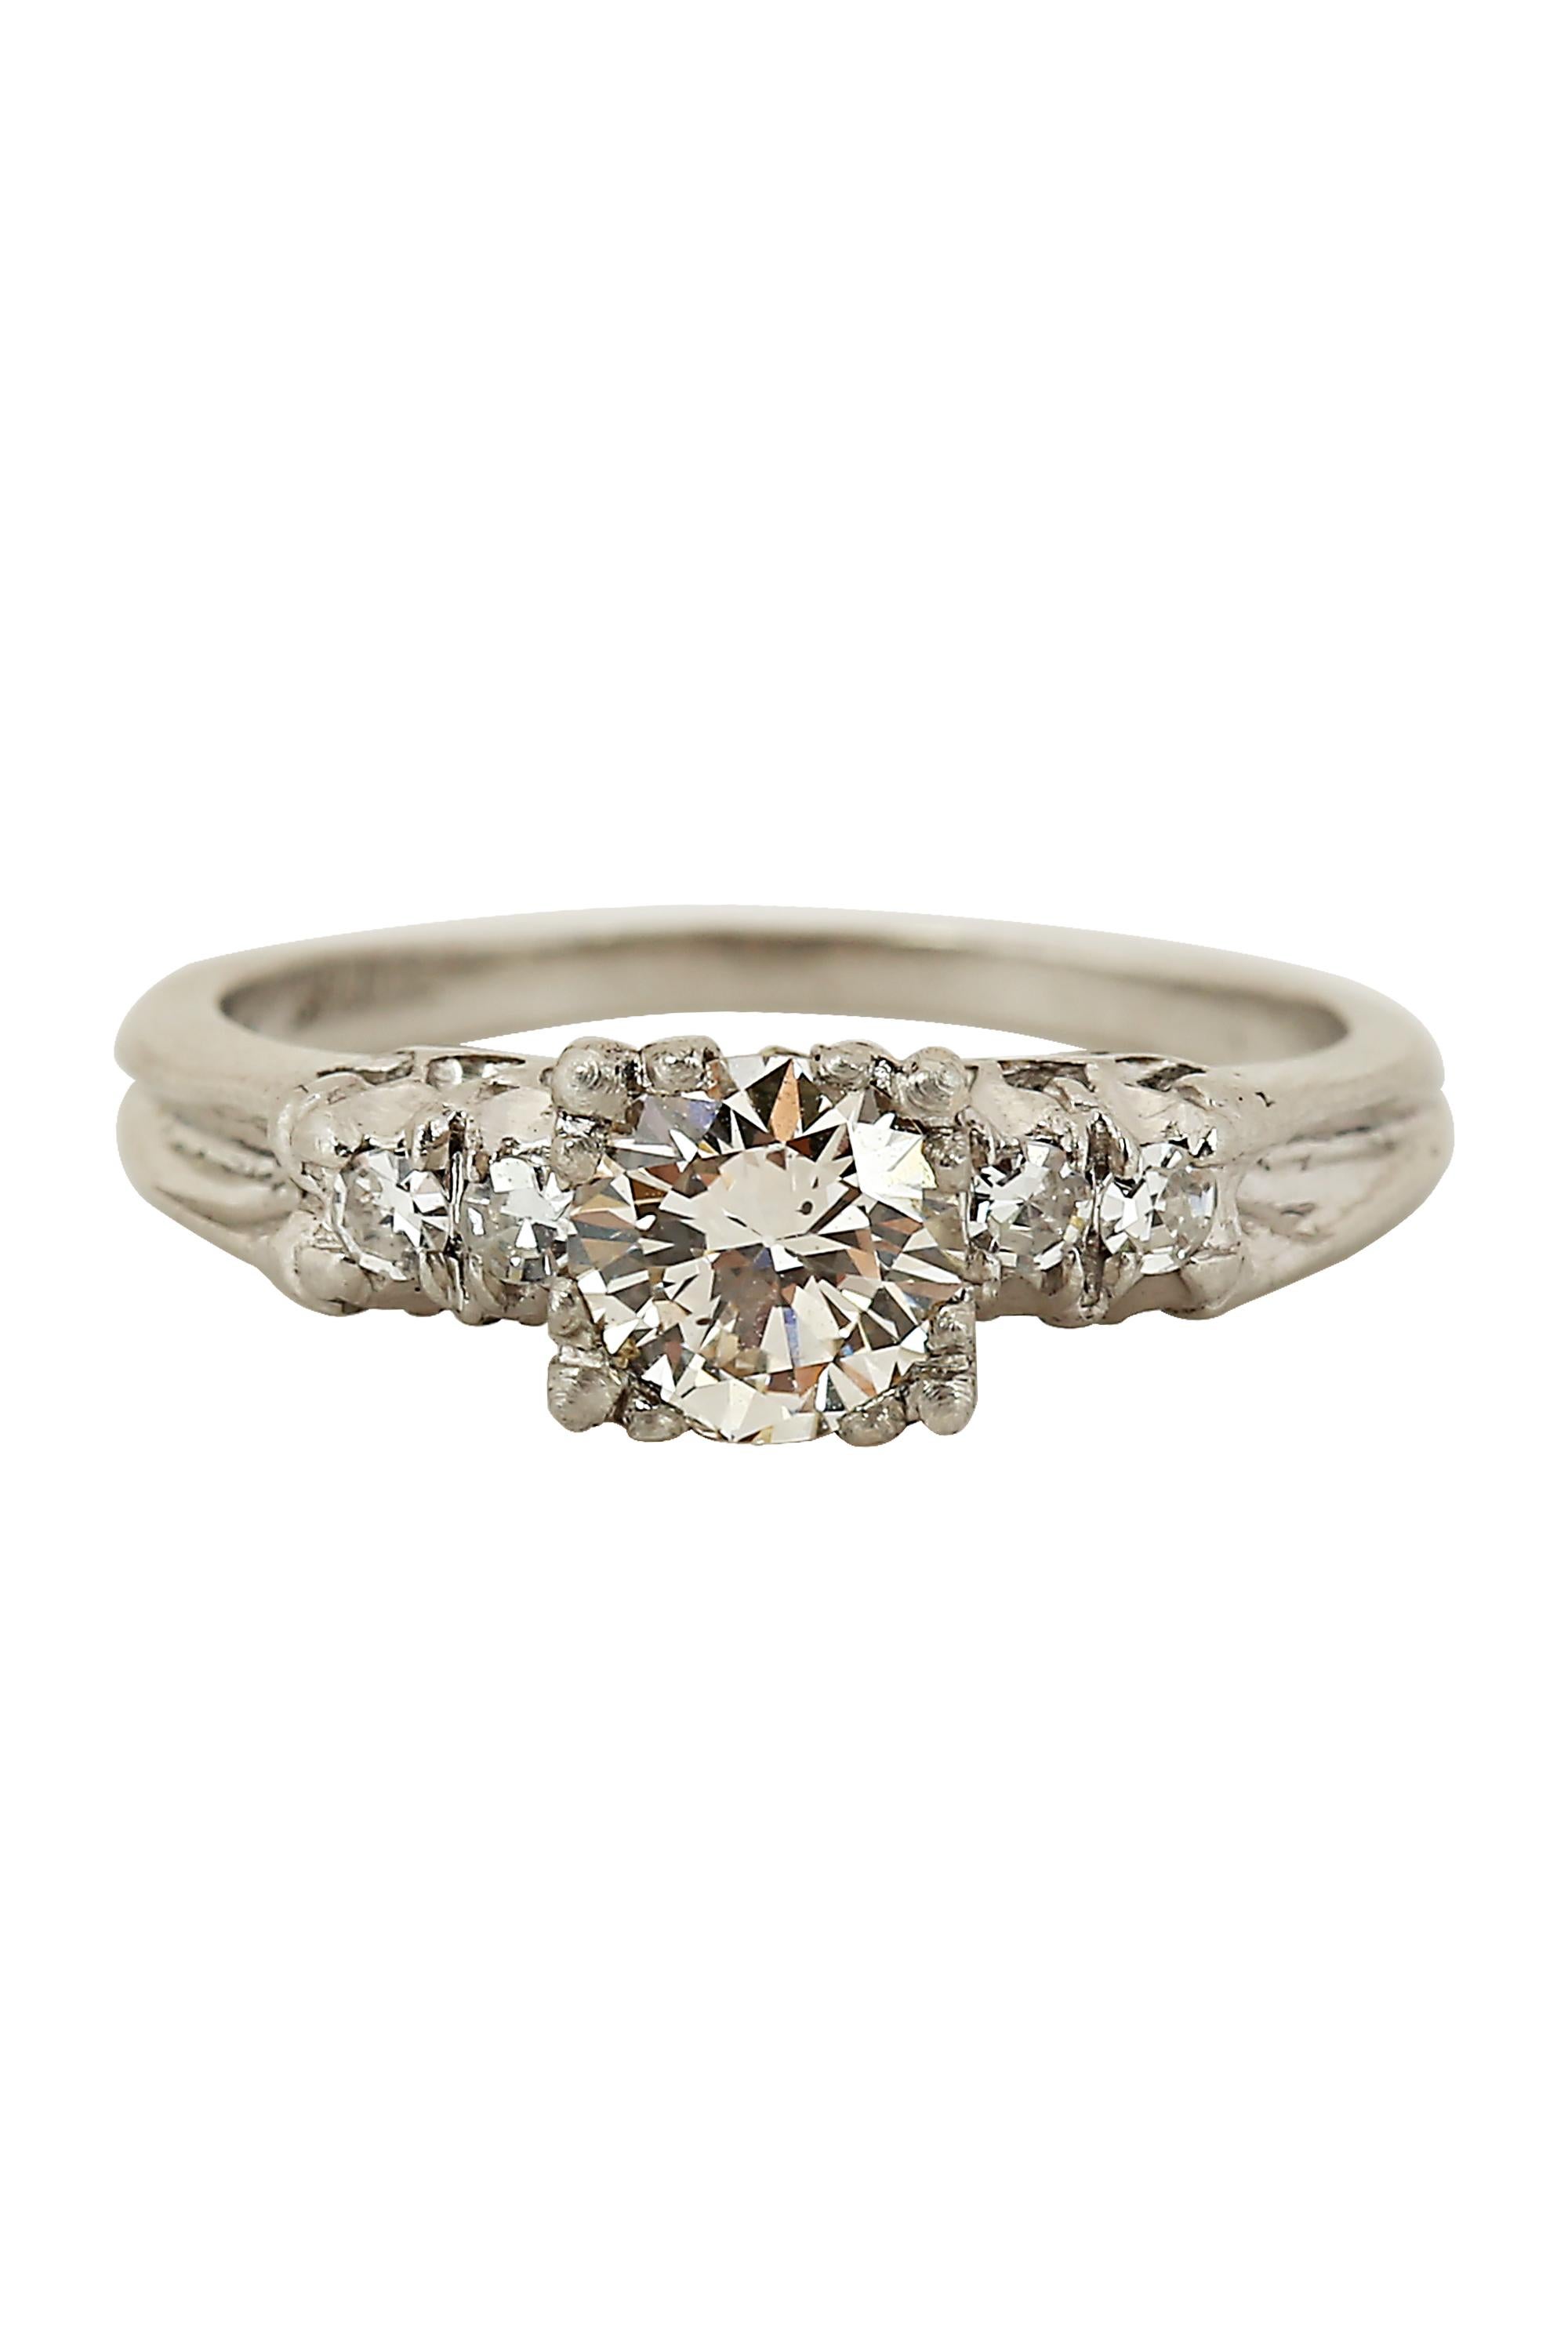 Round Cut Platinum Five Stone Diamond Engagement Ring For Sale